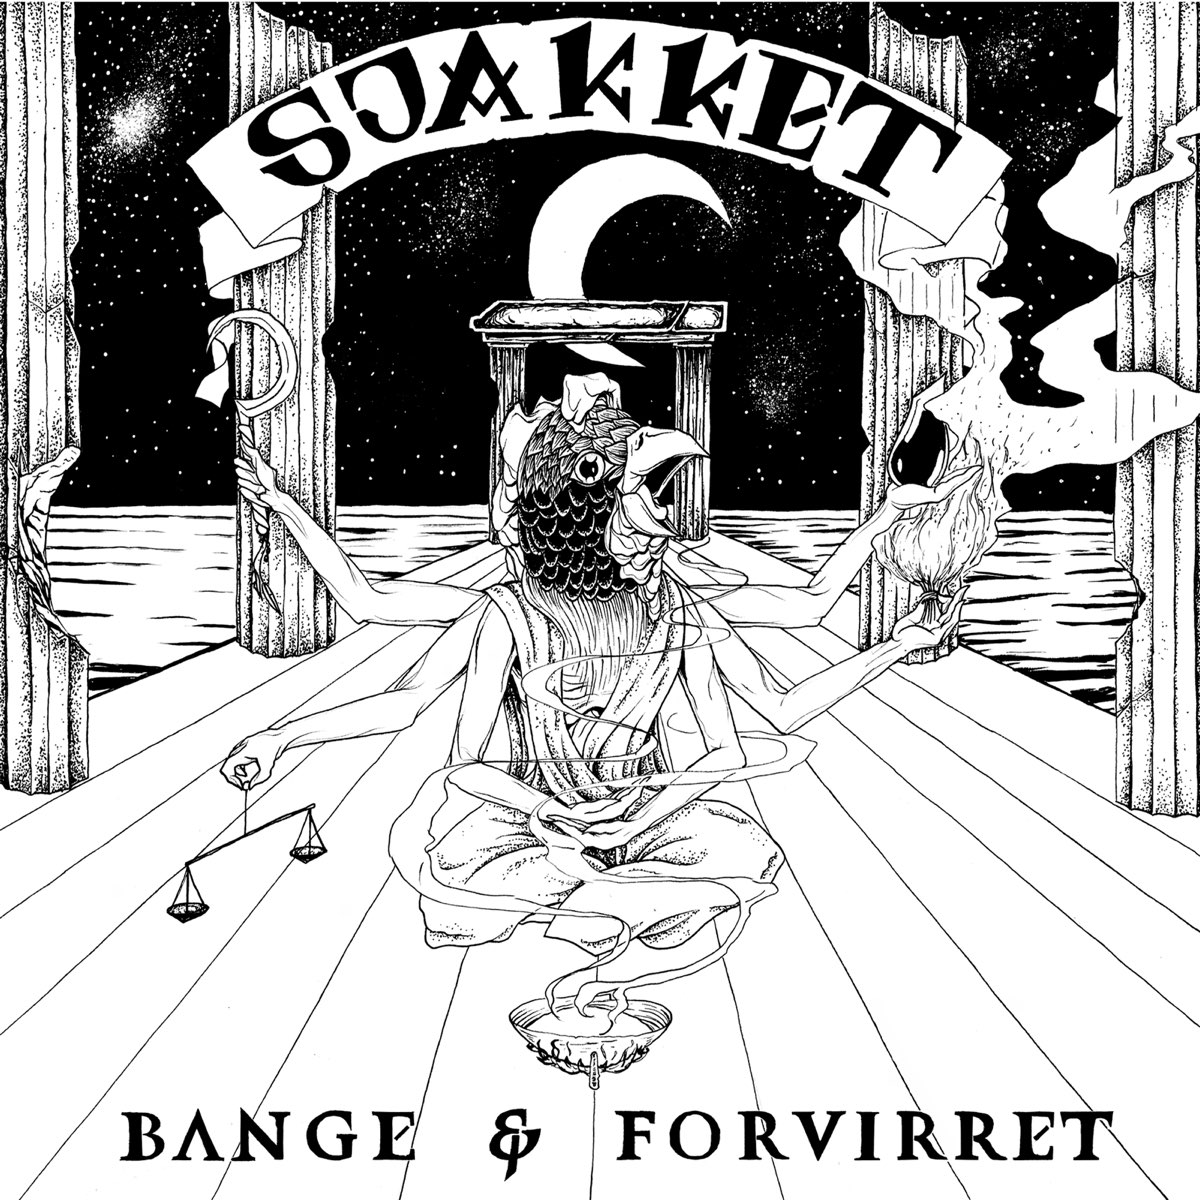 Bange & Forvirret by Sjakket on iTunes